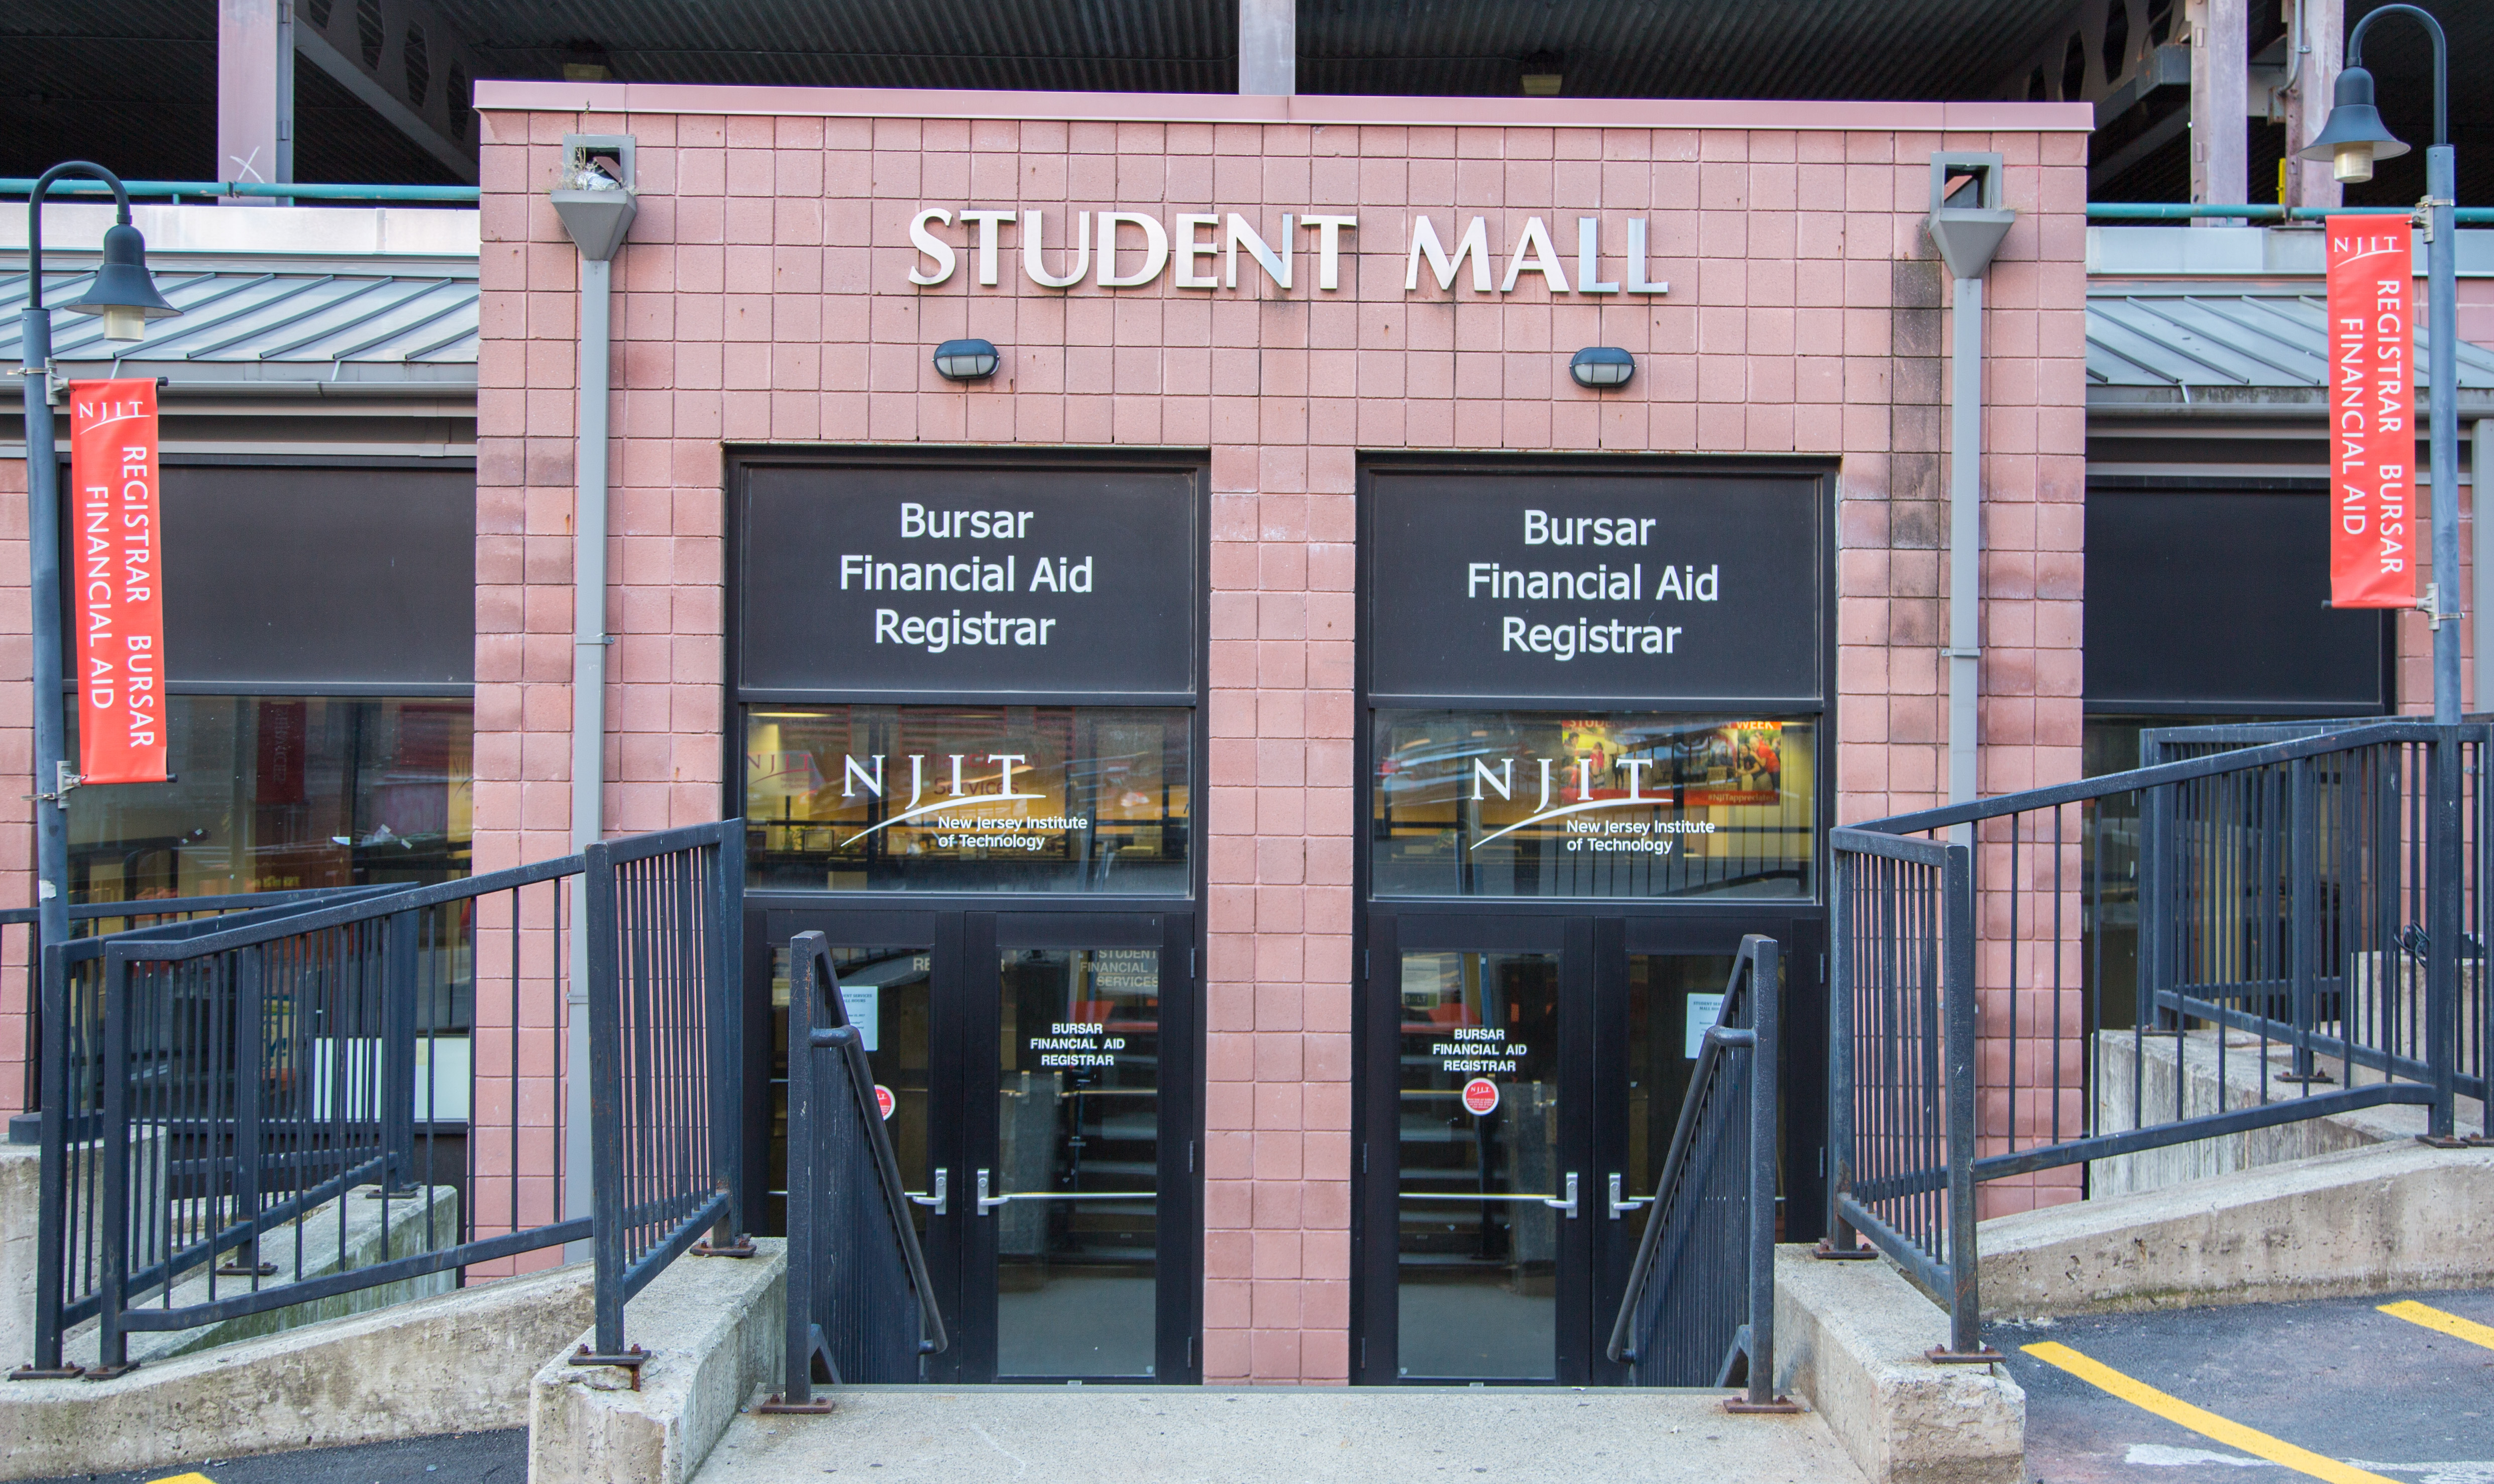 Student Mall